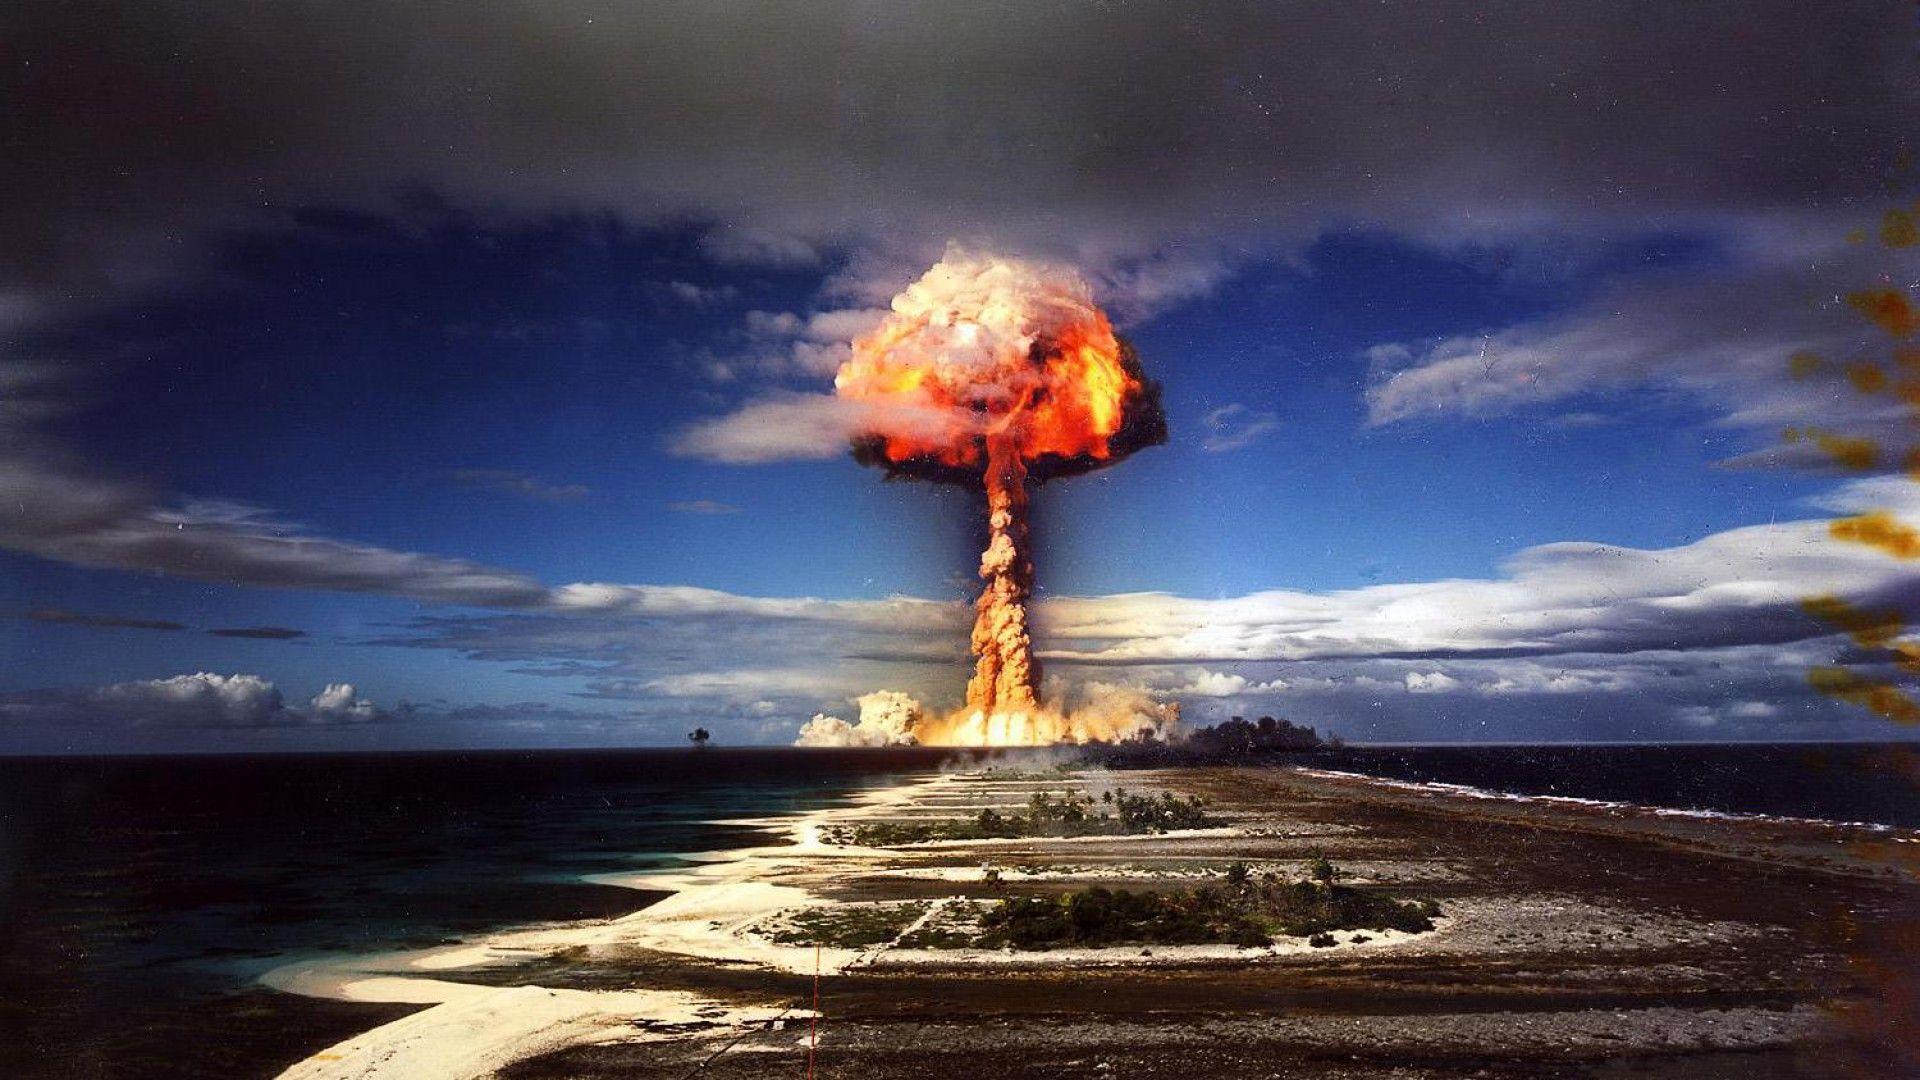 Nuke Explosion Wallpaper